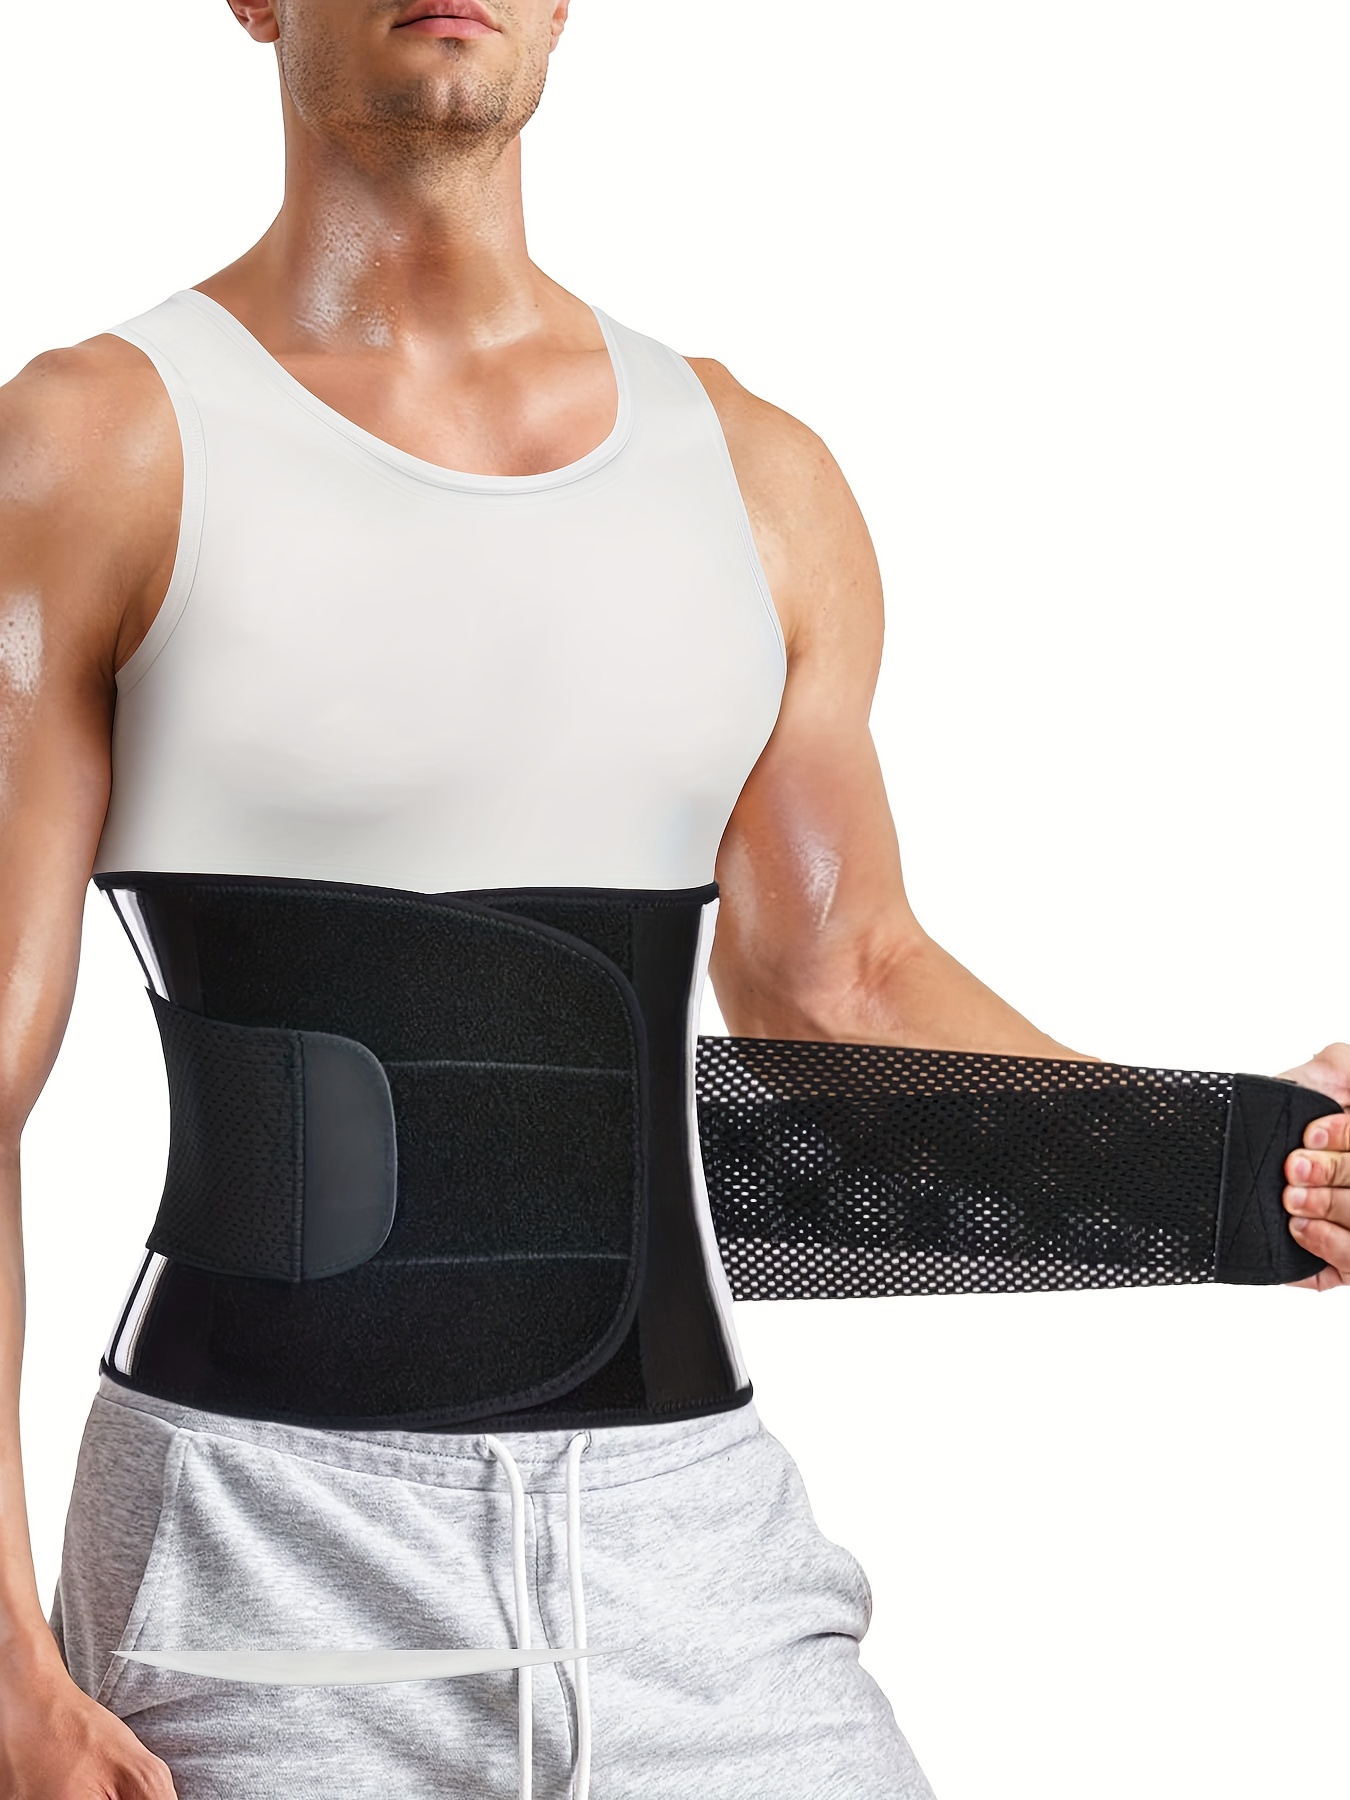 Junlan Neoprene Waist Trainer Belt for Men Tummy Control Waist Trimmer for  Weight loss Slimming Body Shaper for Sport Workout(Black, S) 